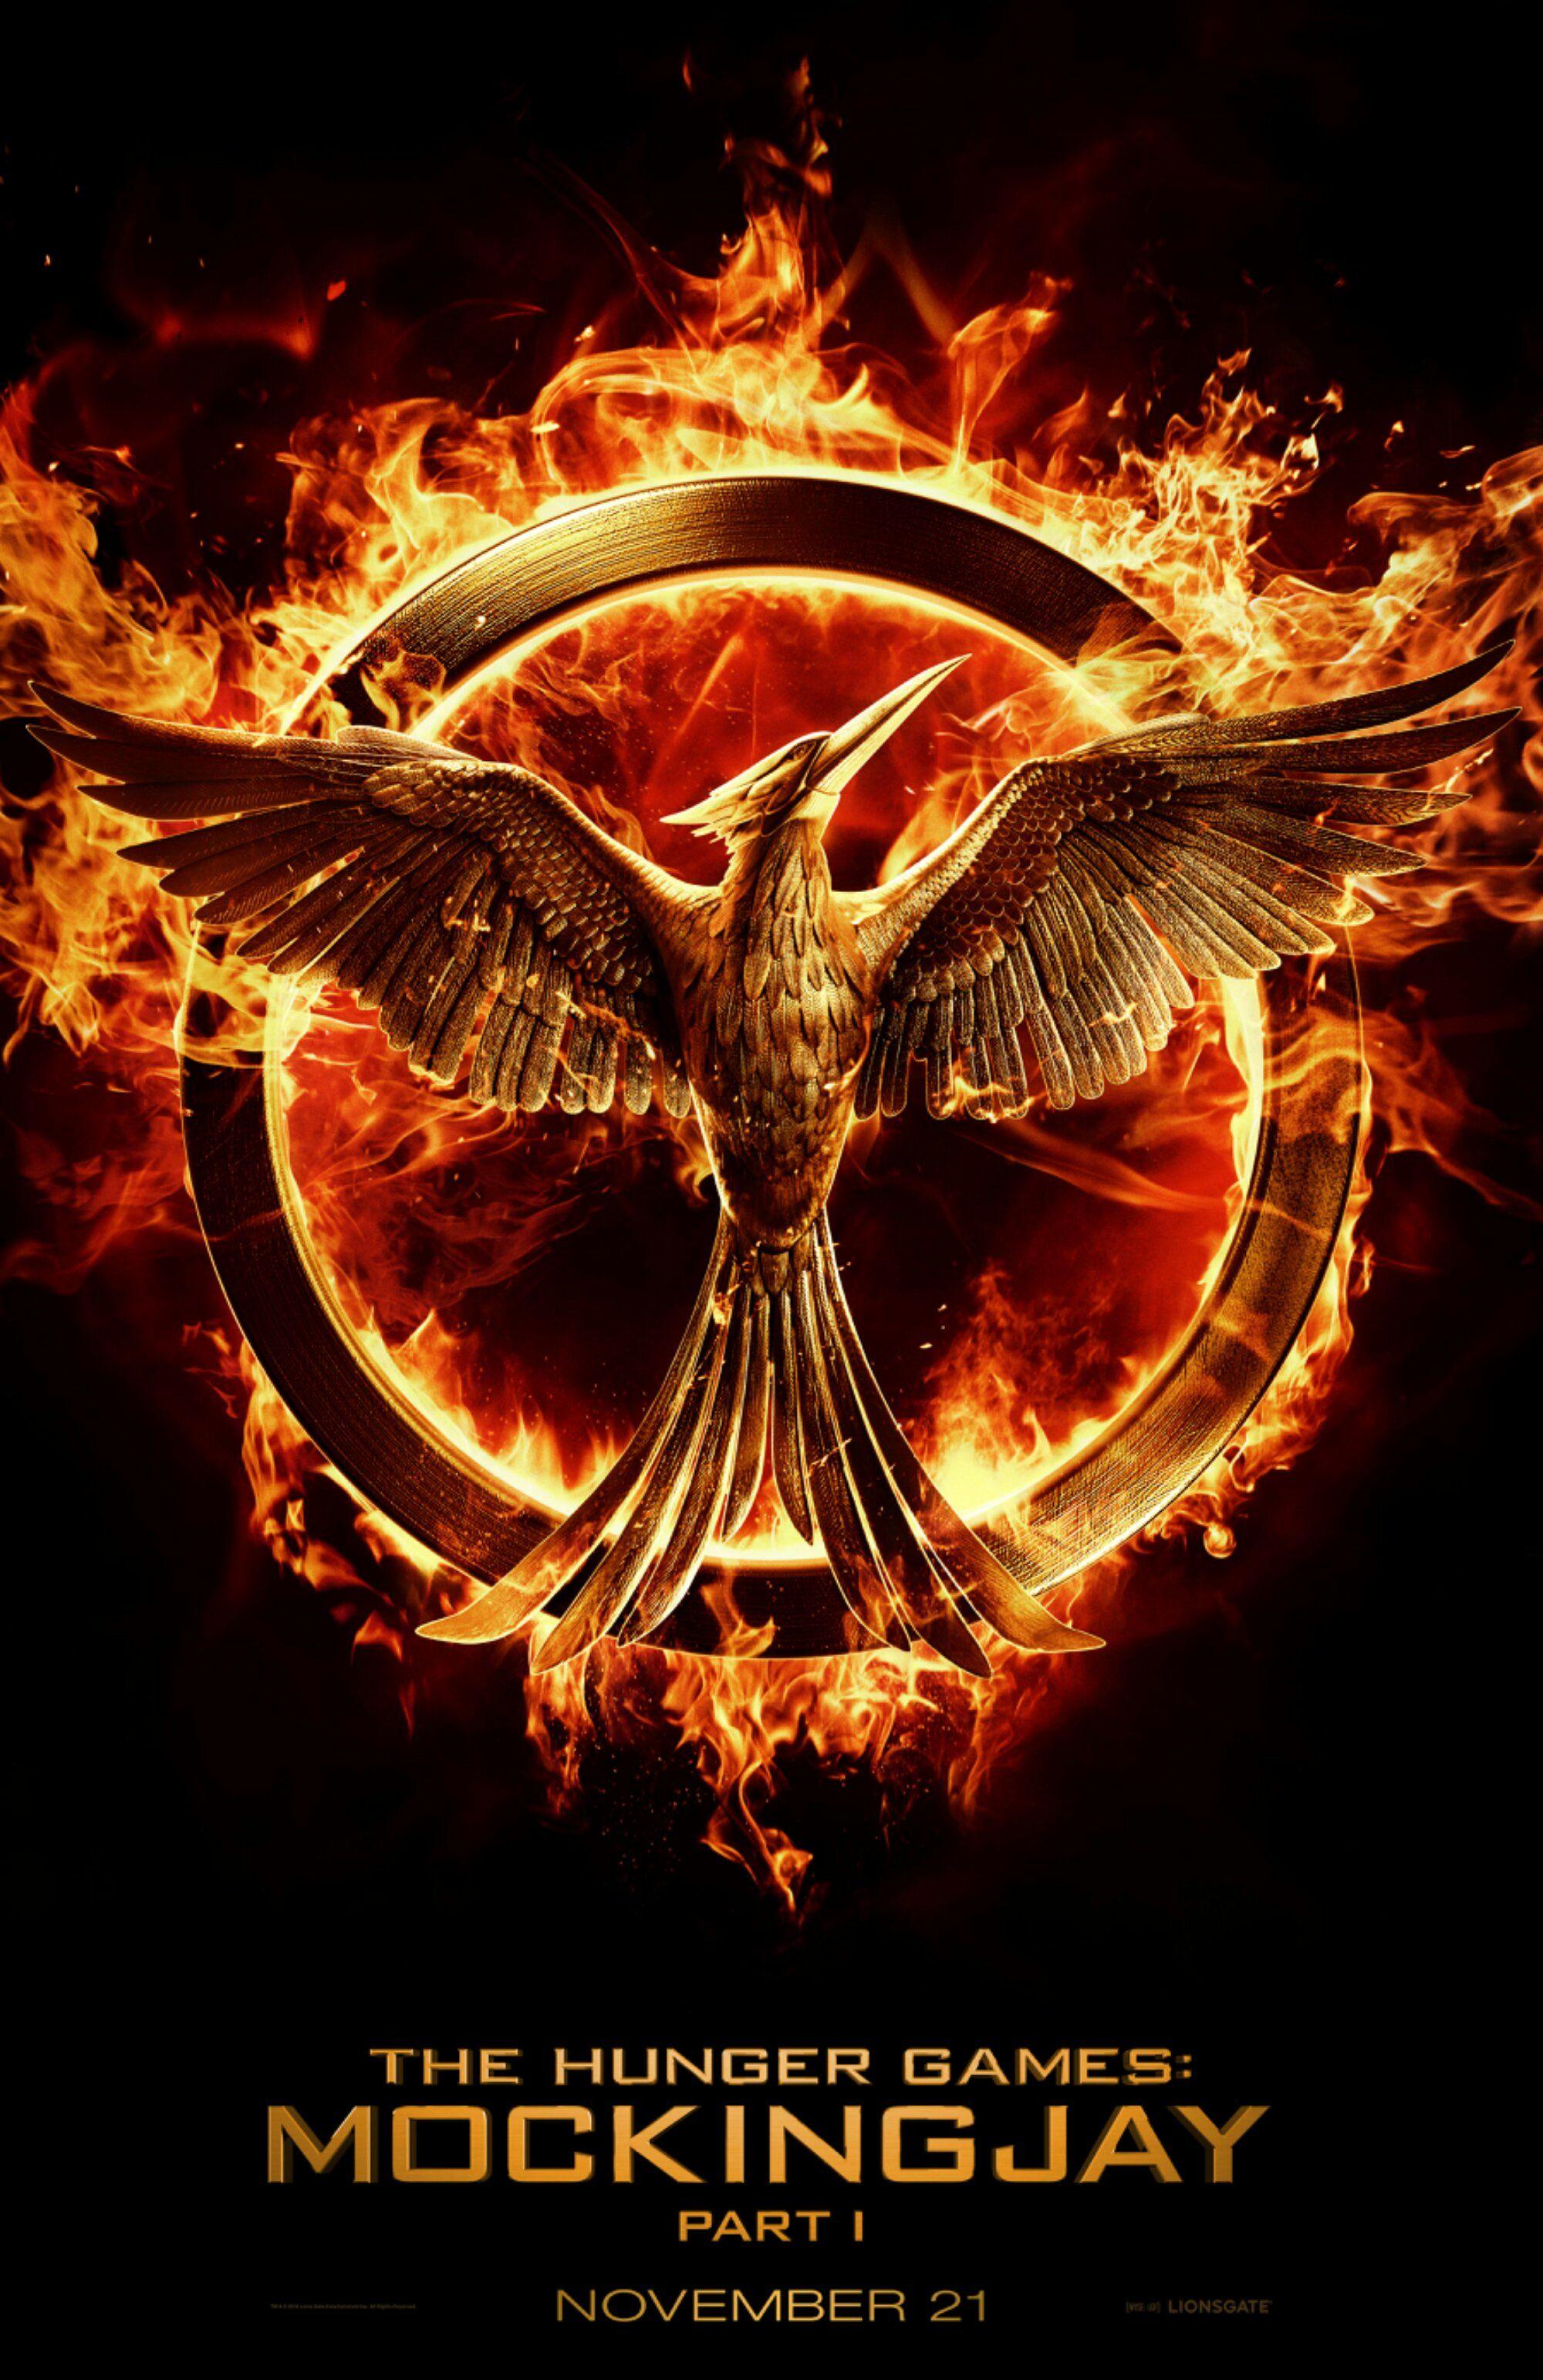 Hunger Games Logo - THE HUNGER GAMES: MOCKINGJAY PART 1 Logo Revealed